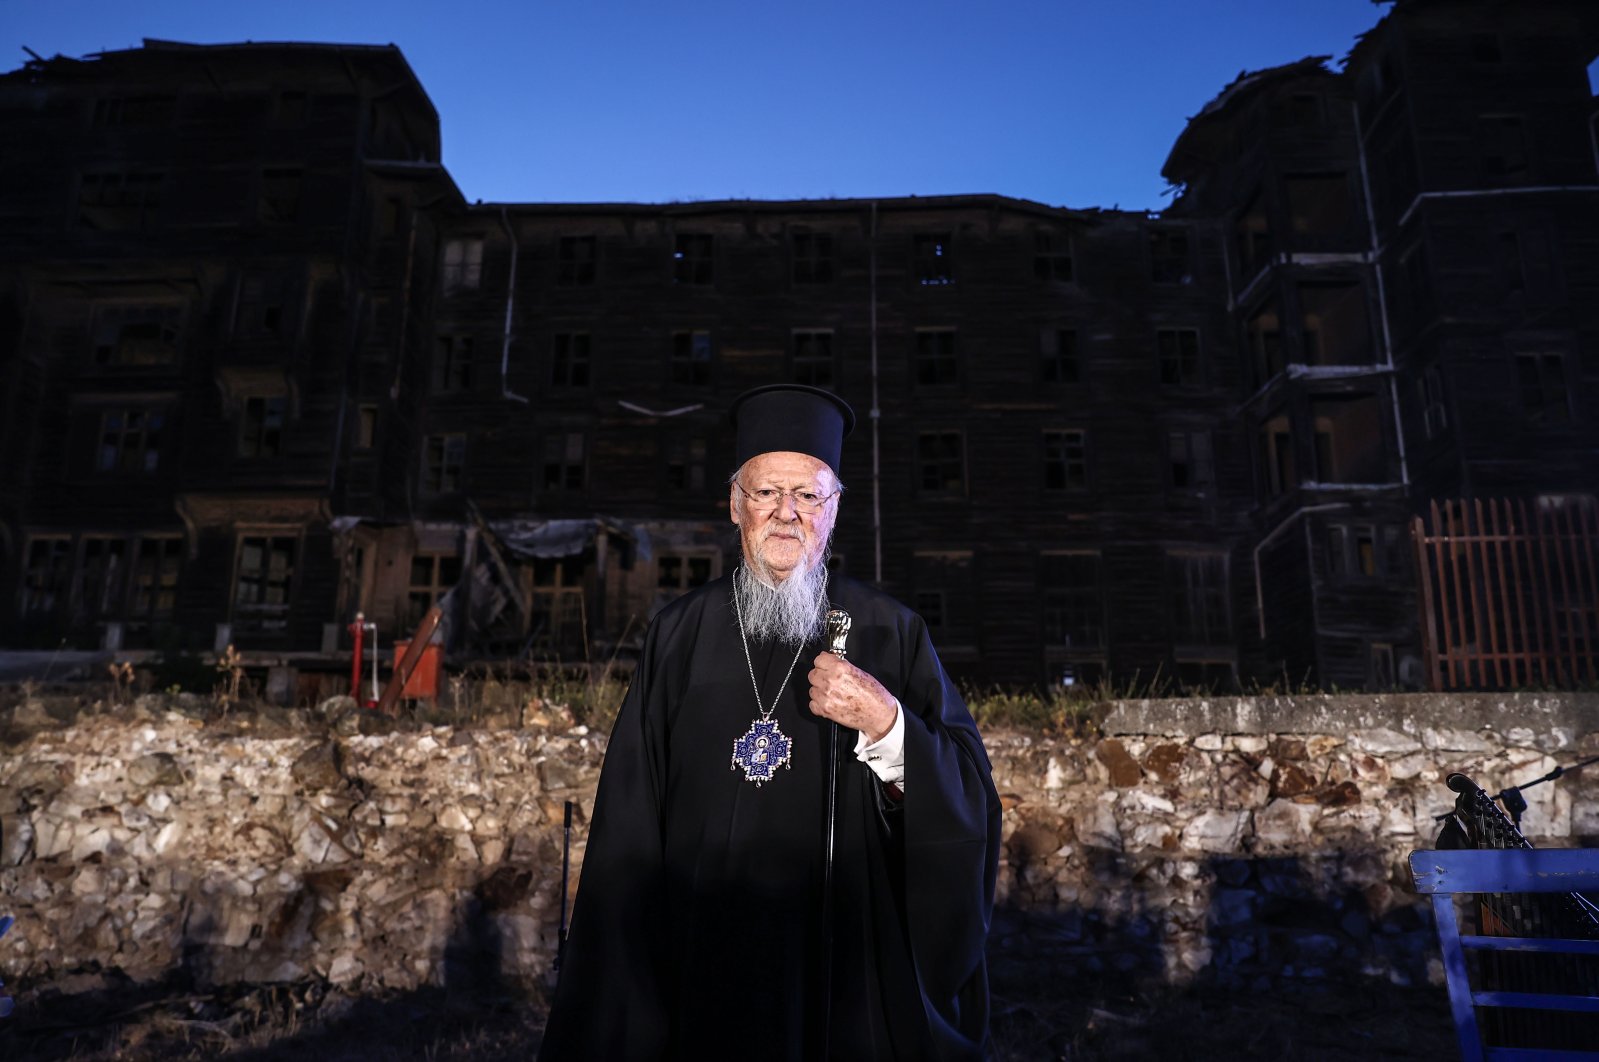 Fener Greek Orthodox Patriarch Bartholomew I poses in front of the orphanage in Istanbul, Turkey, Aug. 28, 2021. (AA Photo)